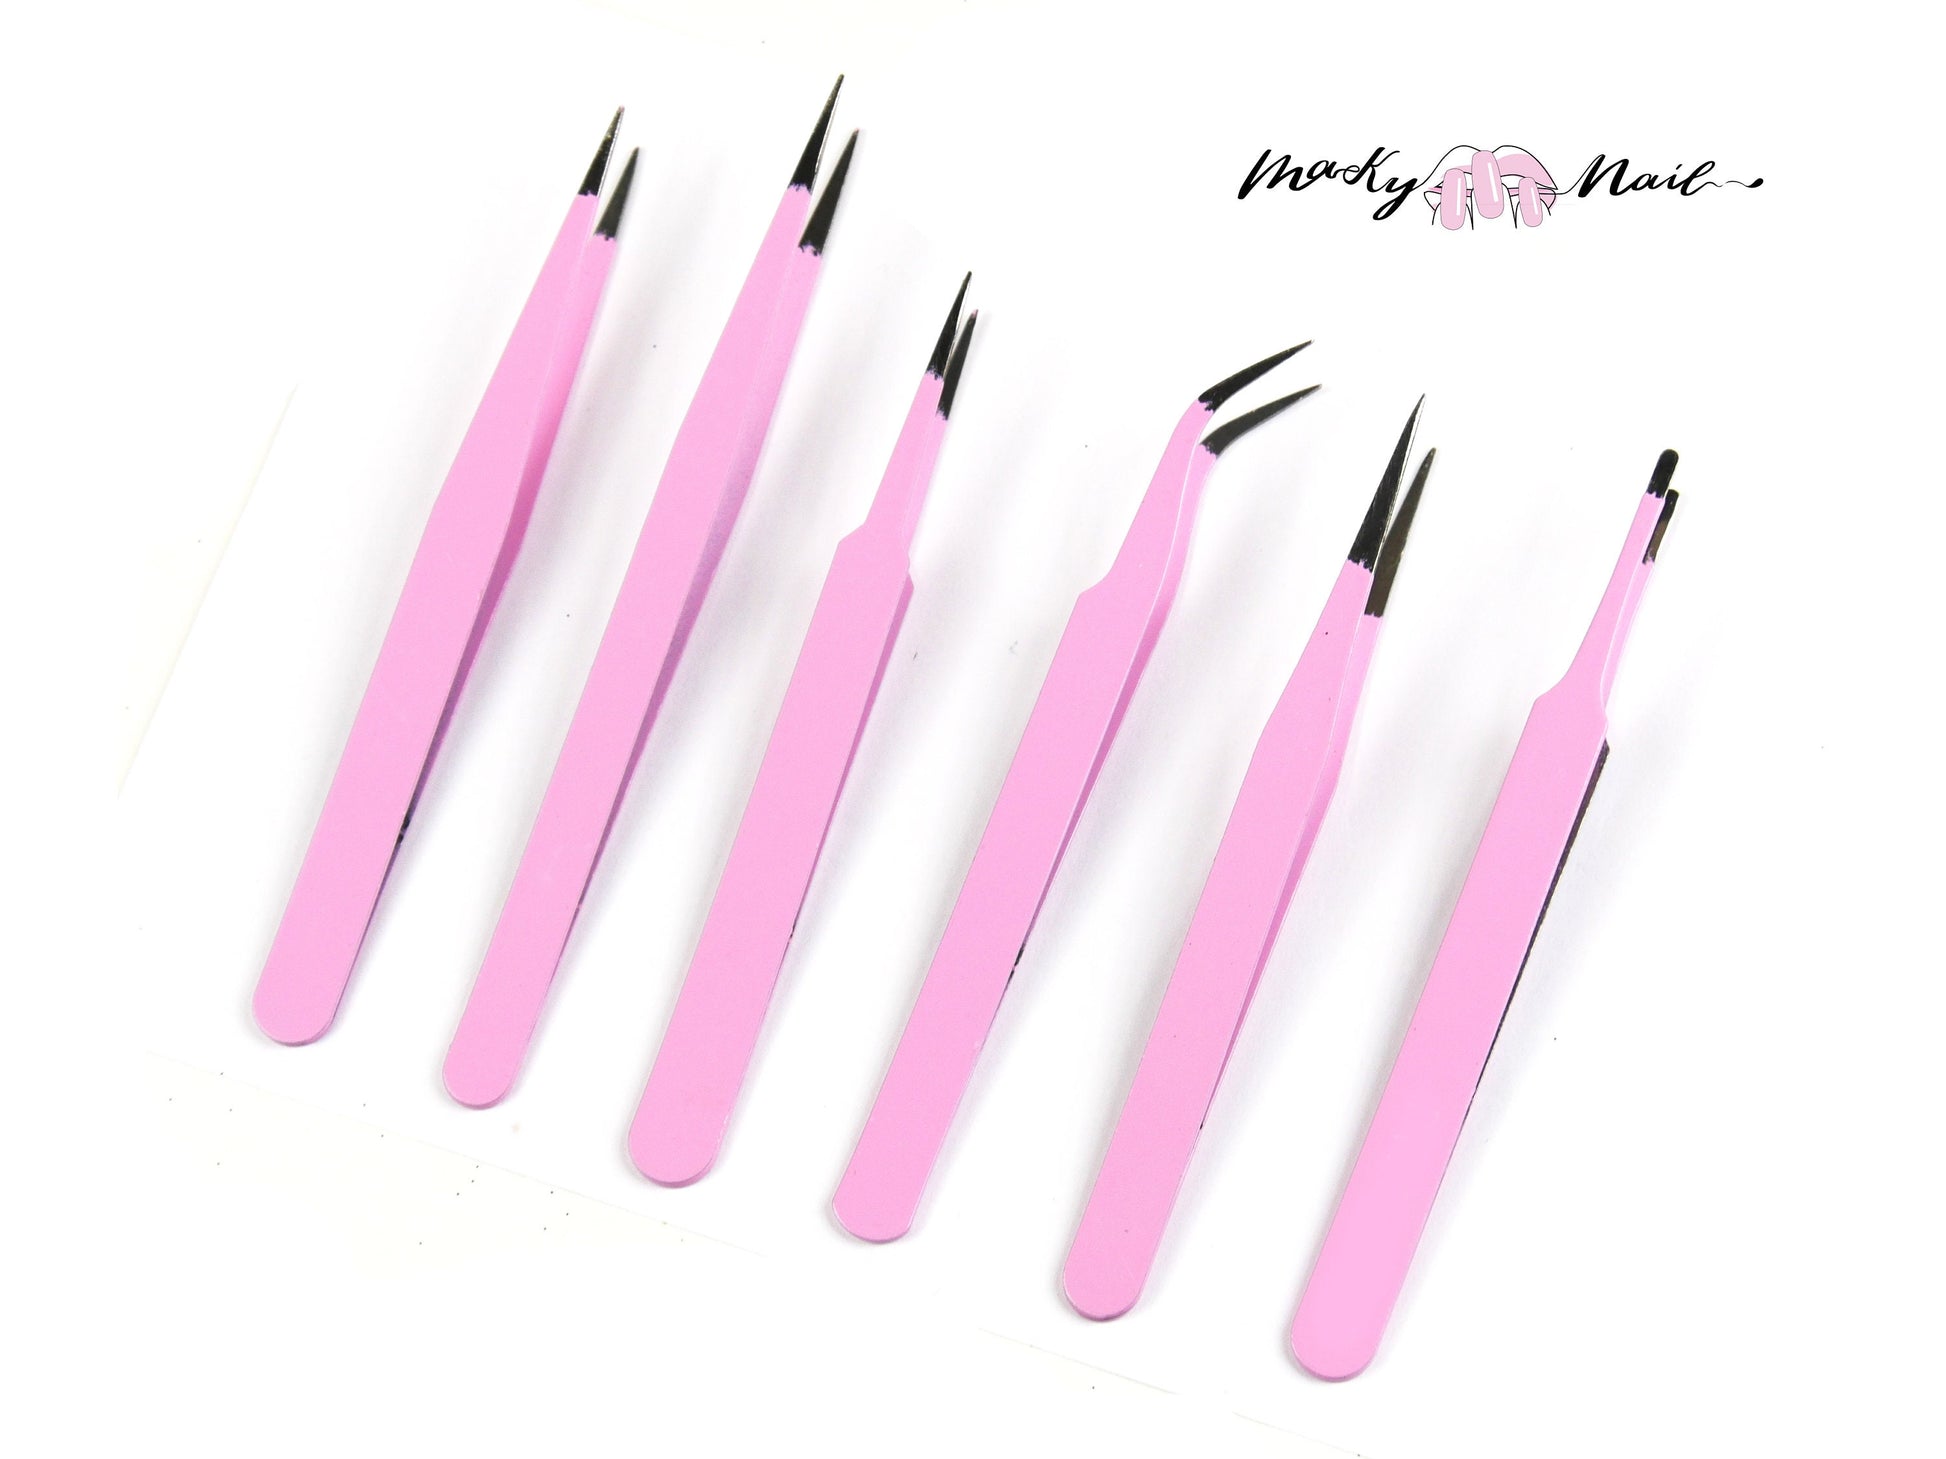 6 pcs Pink Tweezers Set/ Anti-Static Steel Tweezers Set for Craft, Jewelry, Electronics, Nail art tool supply/ Dotting tool